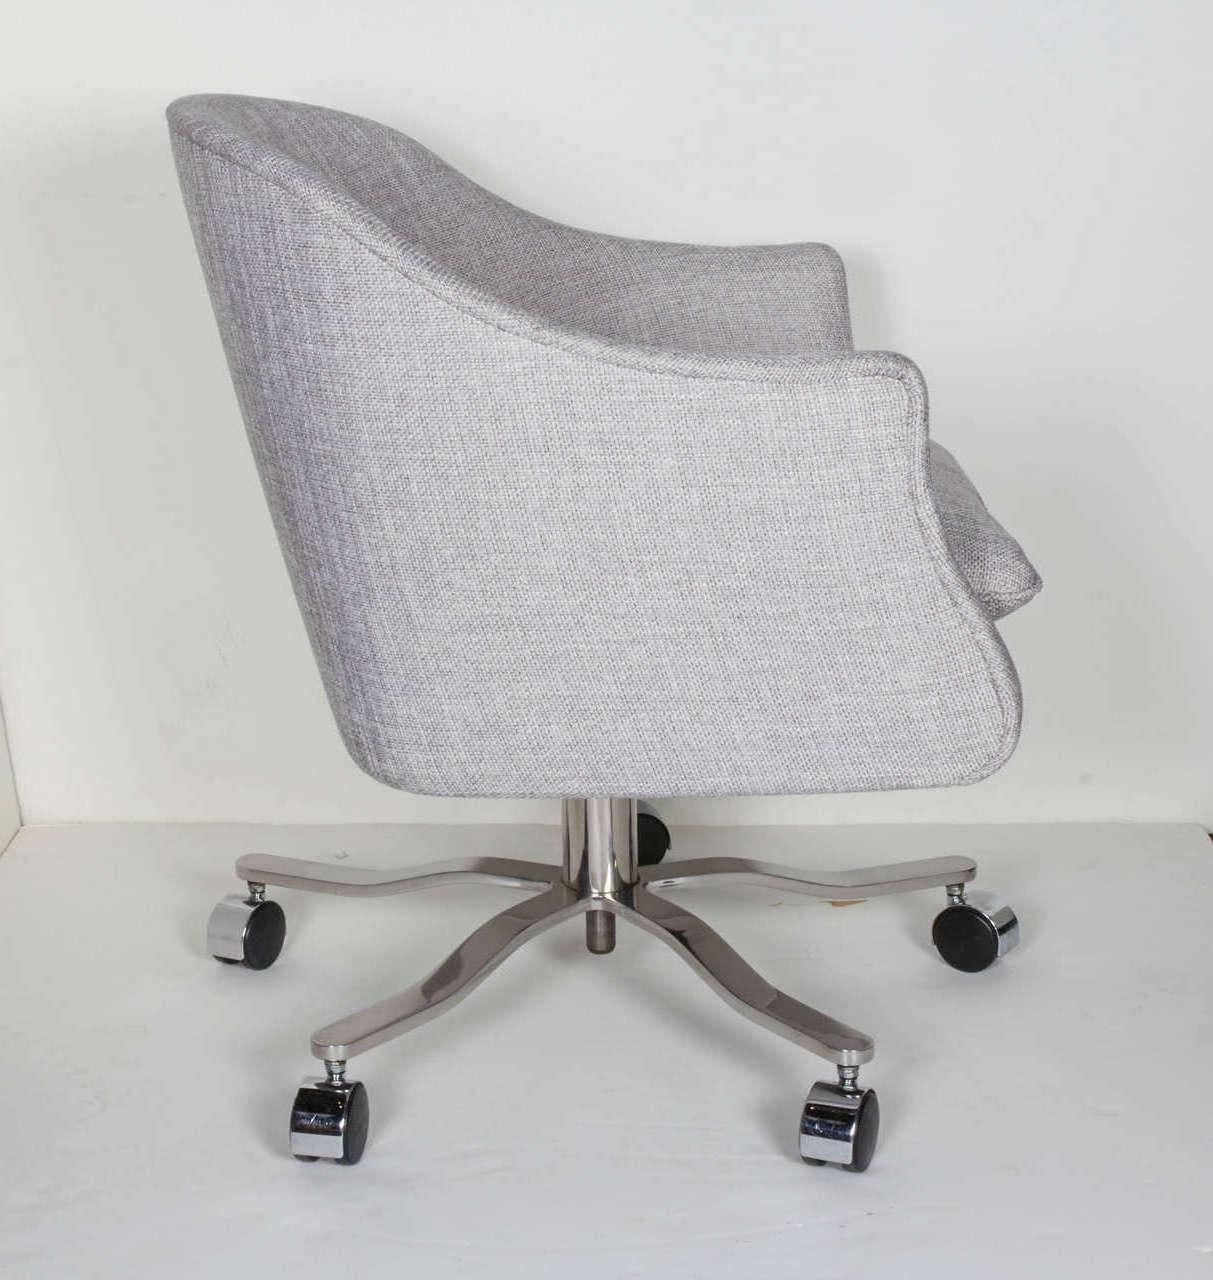 Mid-Century Modern Swivel Desk Chair Designed by Ward Bennett 1